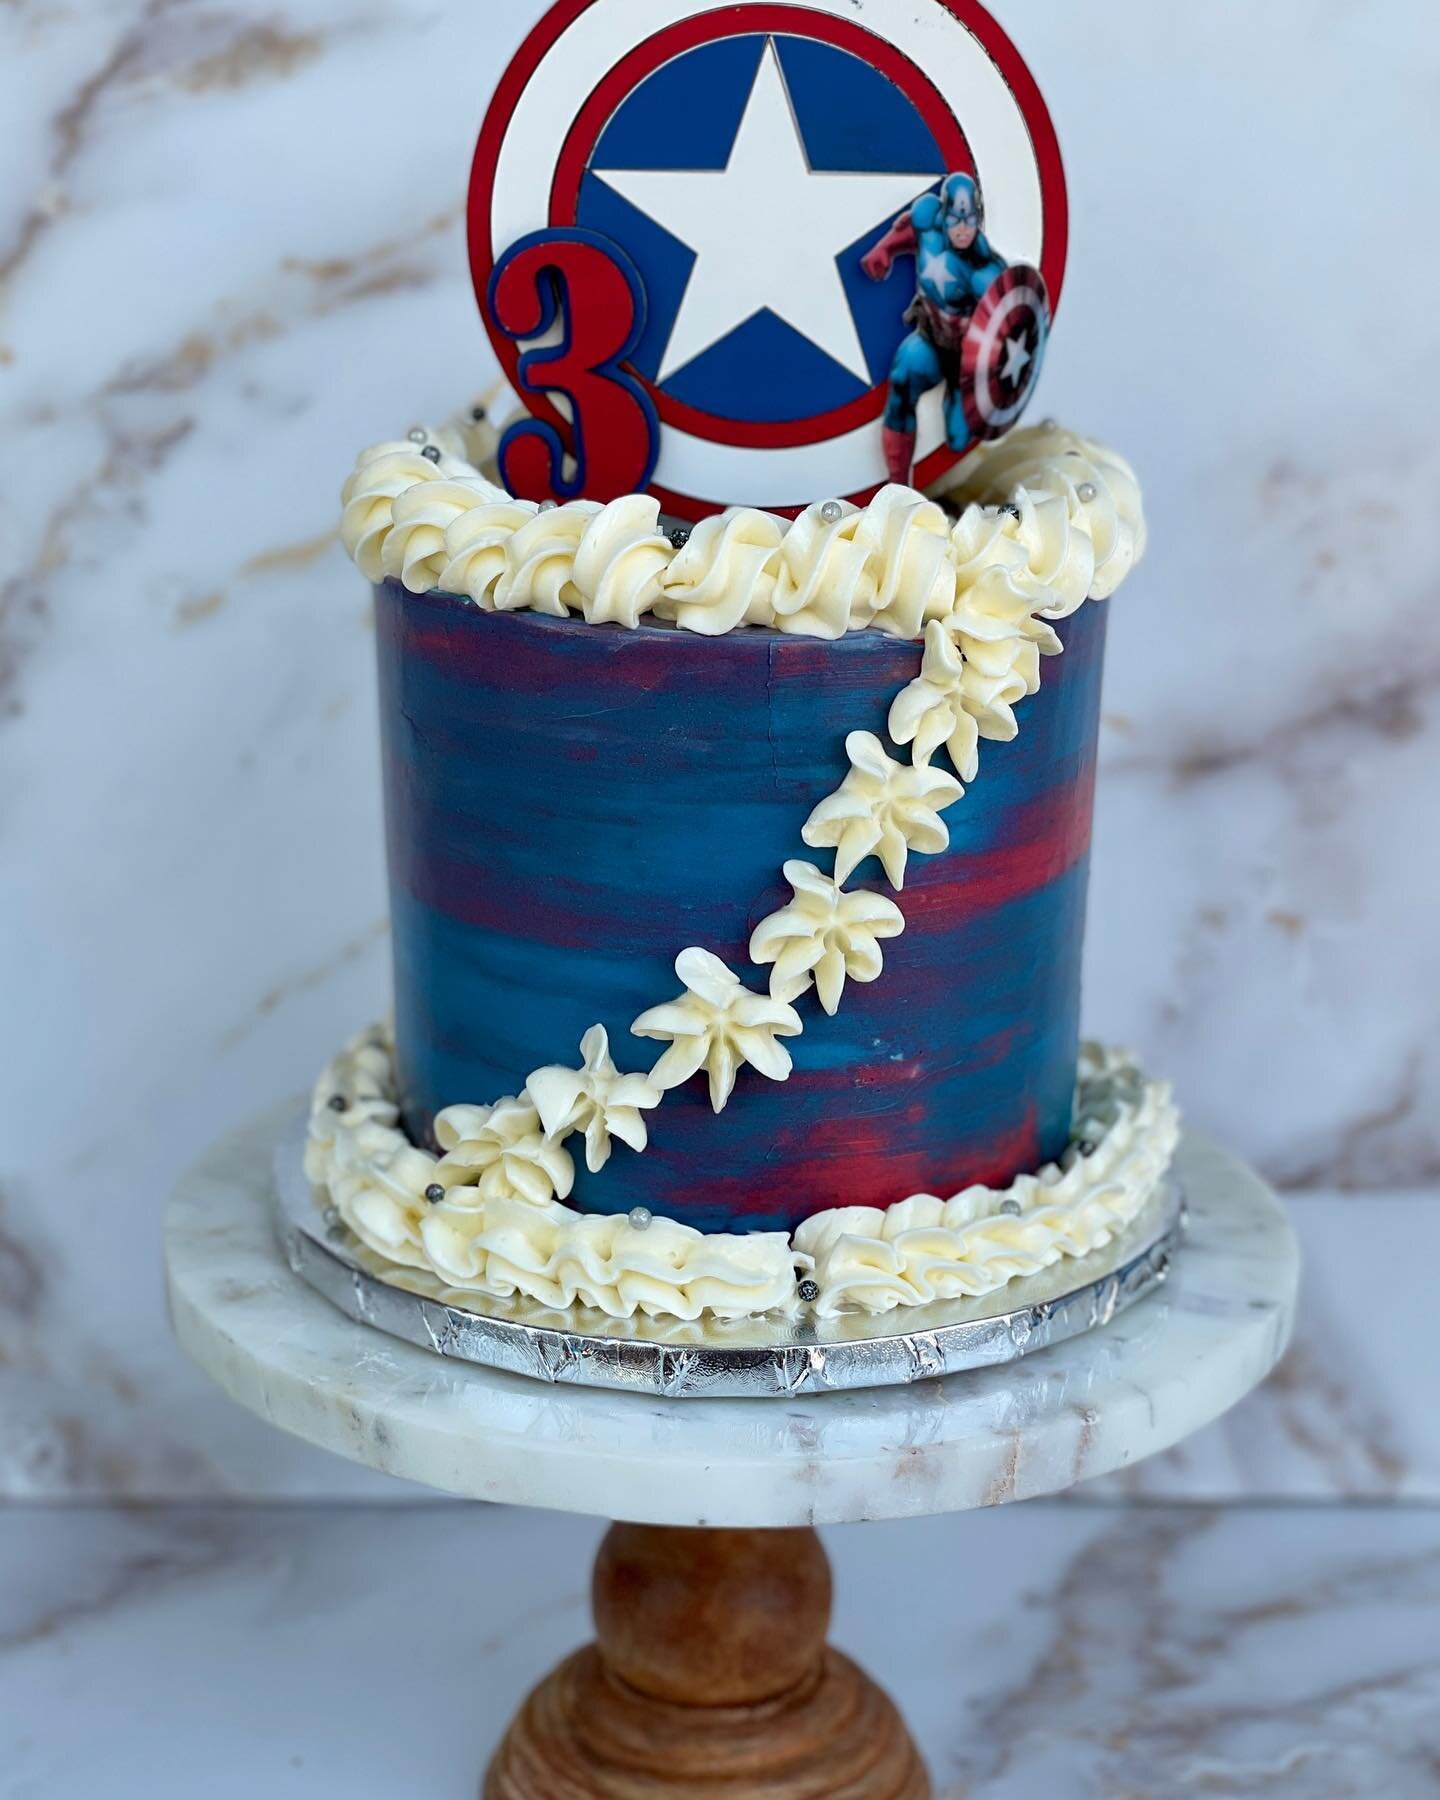 Happy Monday!!
Captain America Cake 
Cake topper: @thetealcraftroom 

.
.
.
.
.
.
.
.
#cake #cakedecorating #birthdaycake #cakedesign #captainamerica #pastry #pastries #dessert #sweet #baker #eastbay #eastbayeats #eastbayfoodie #eastbaydesserts #baya